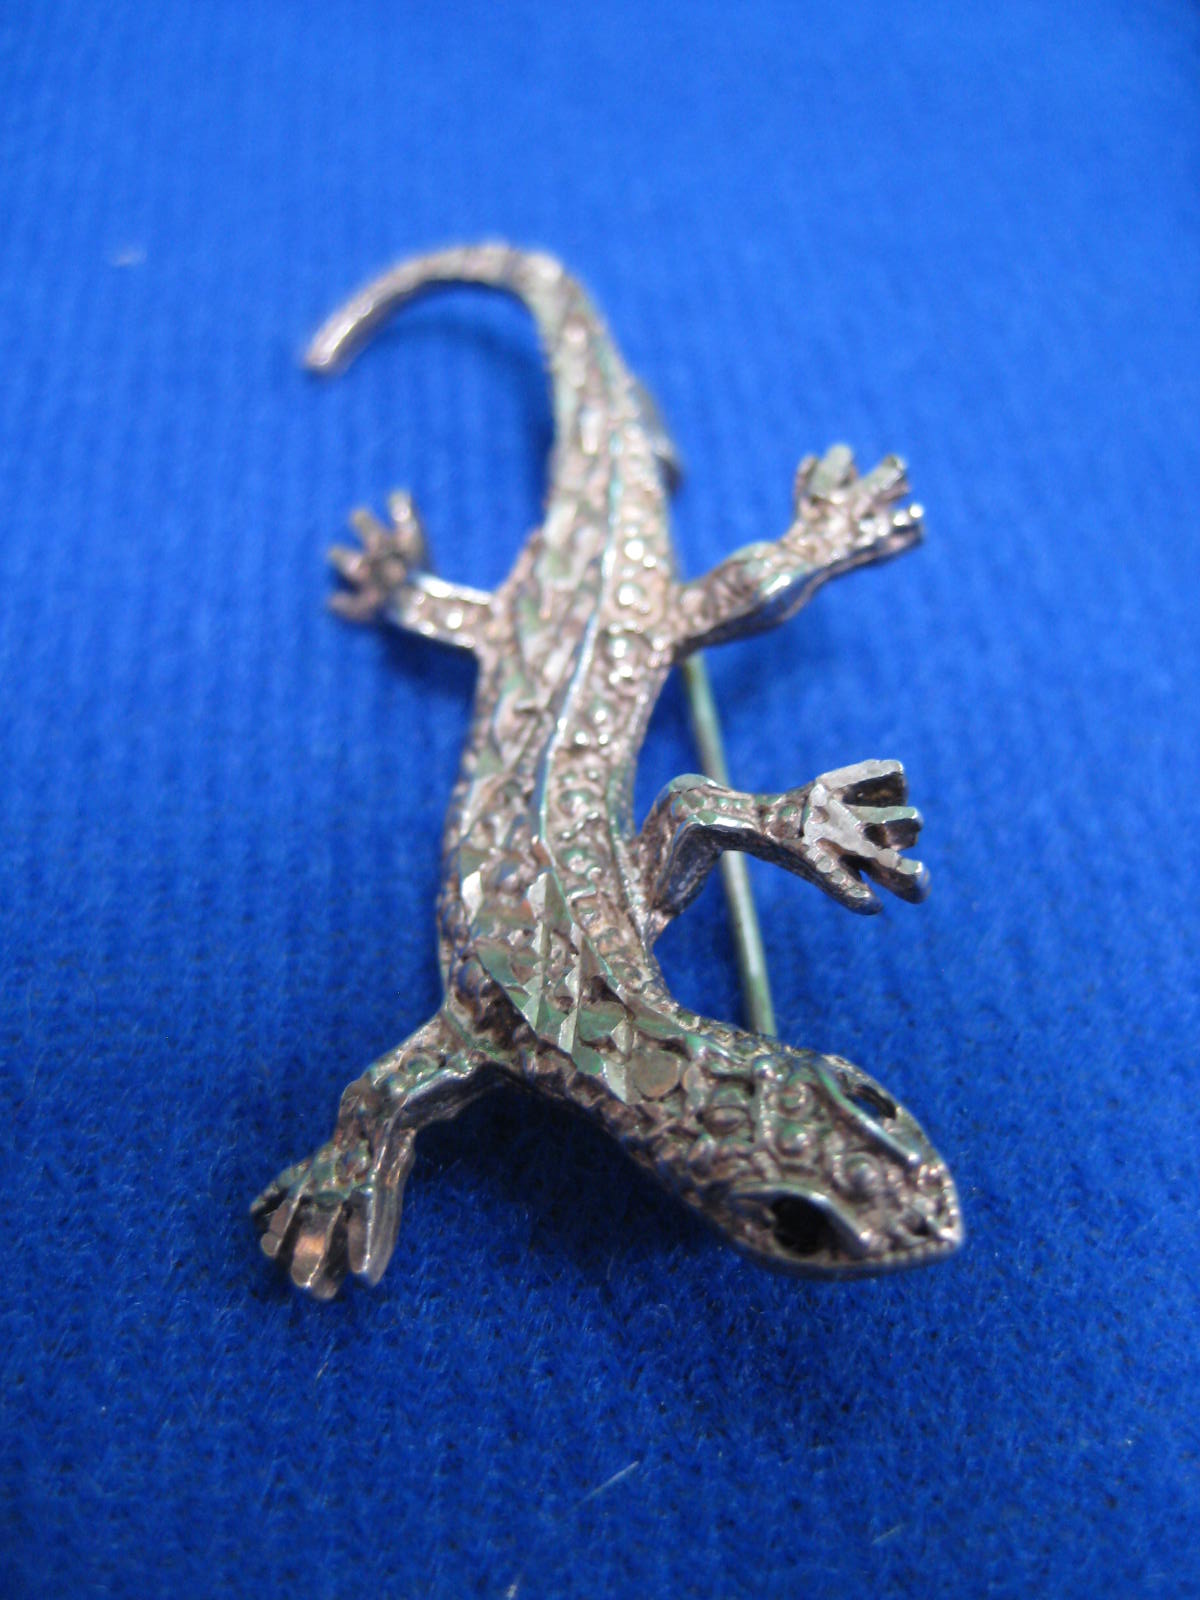 A silver lizard brooch